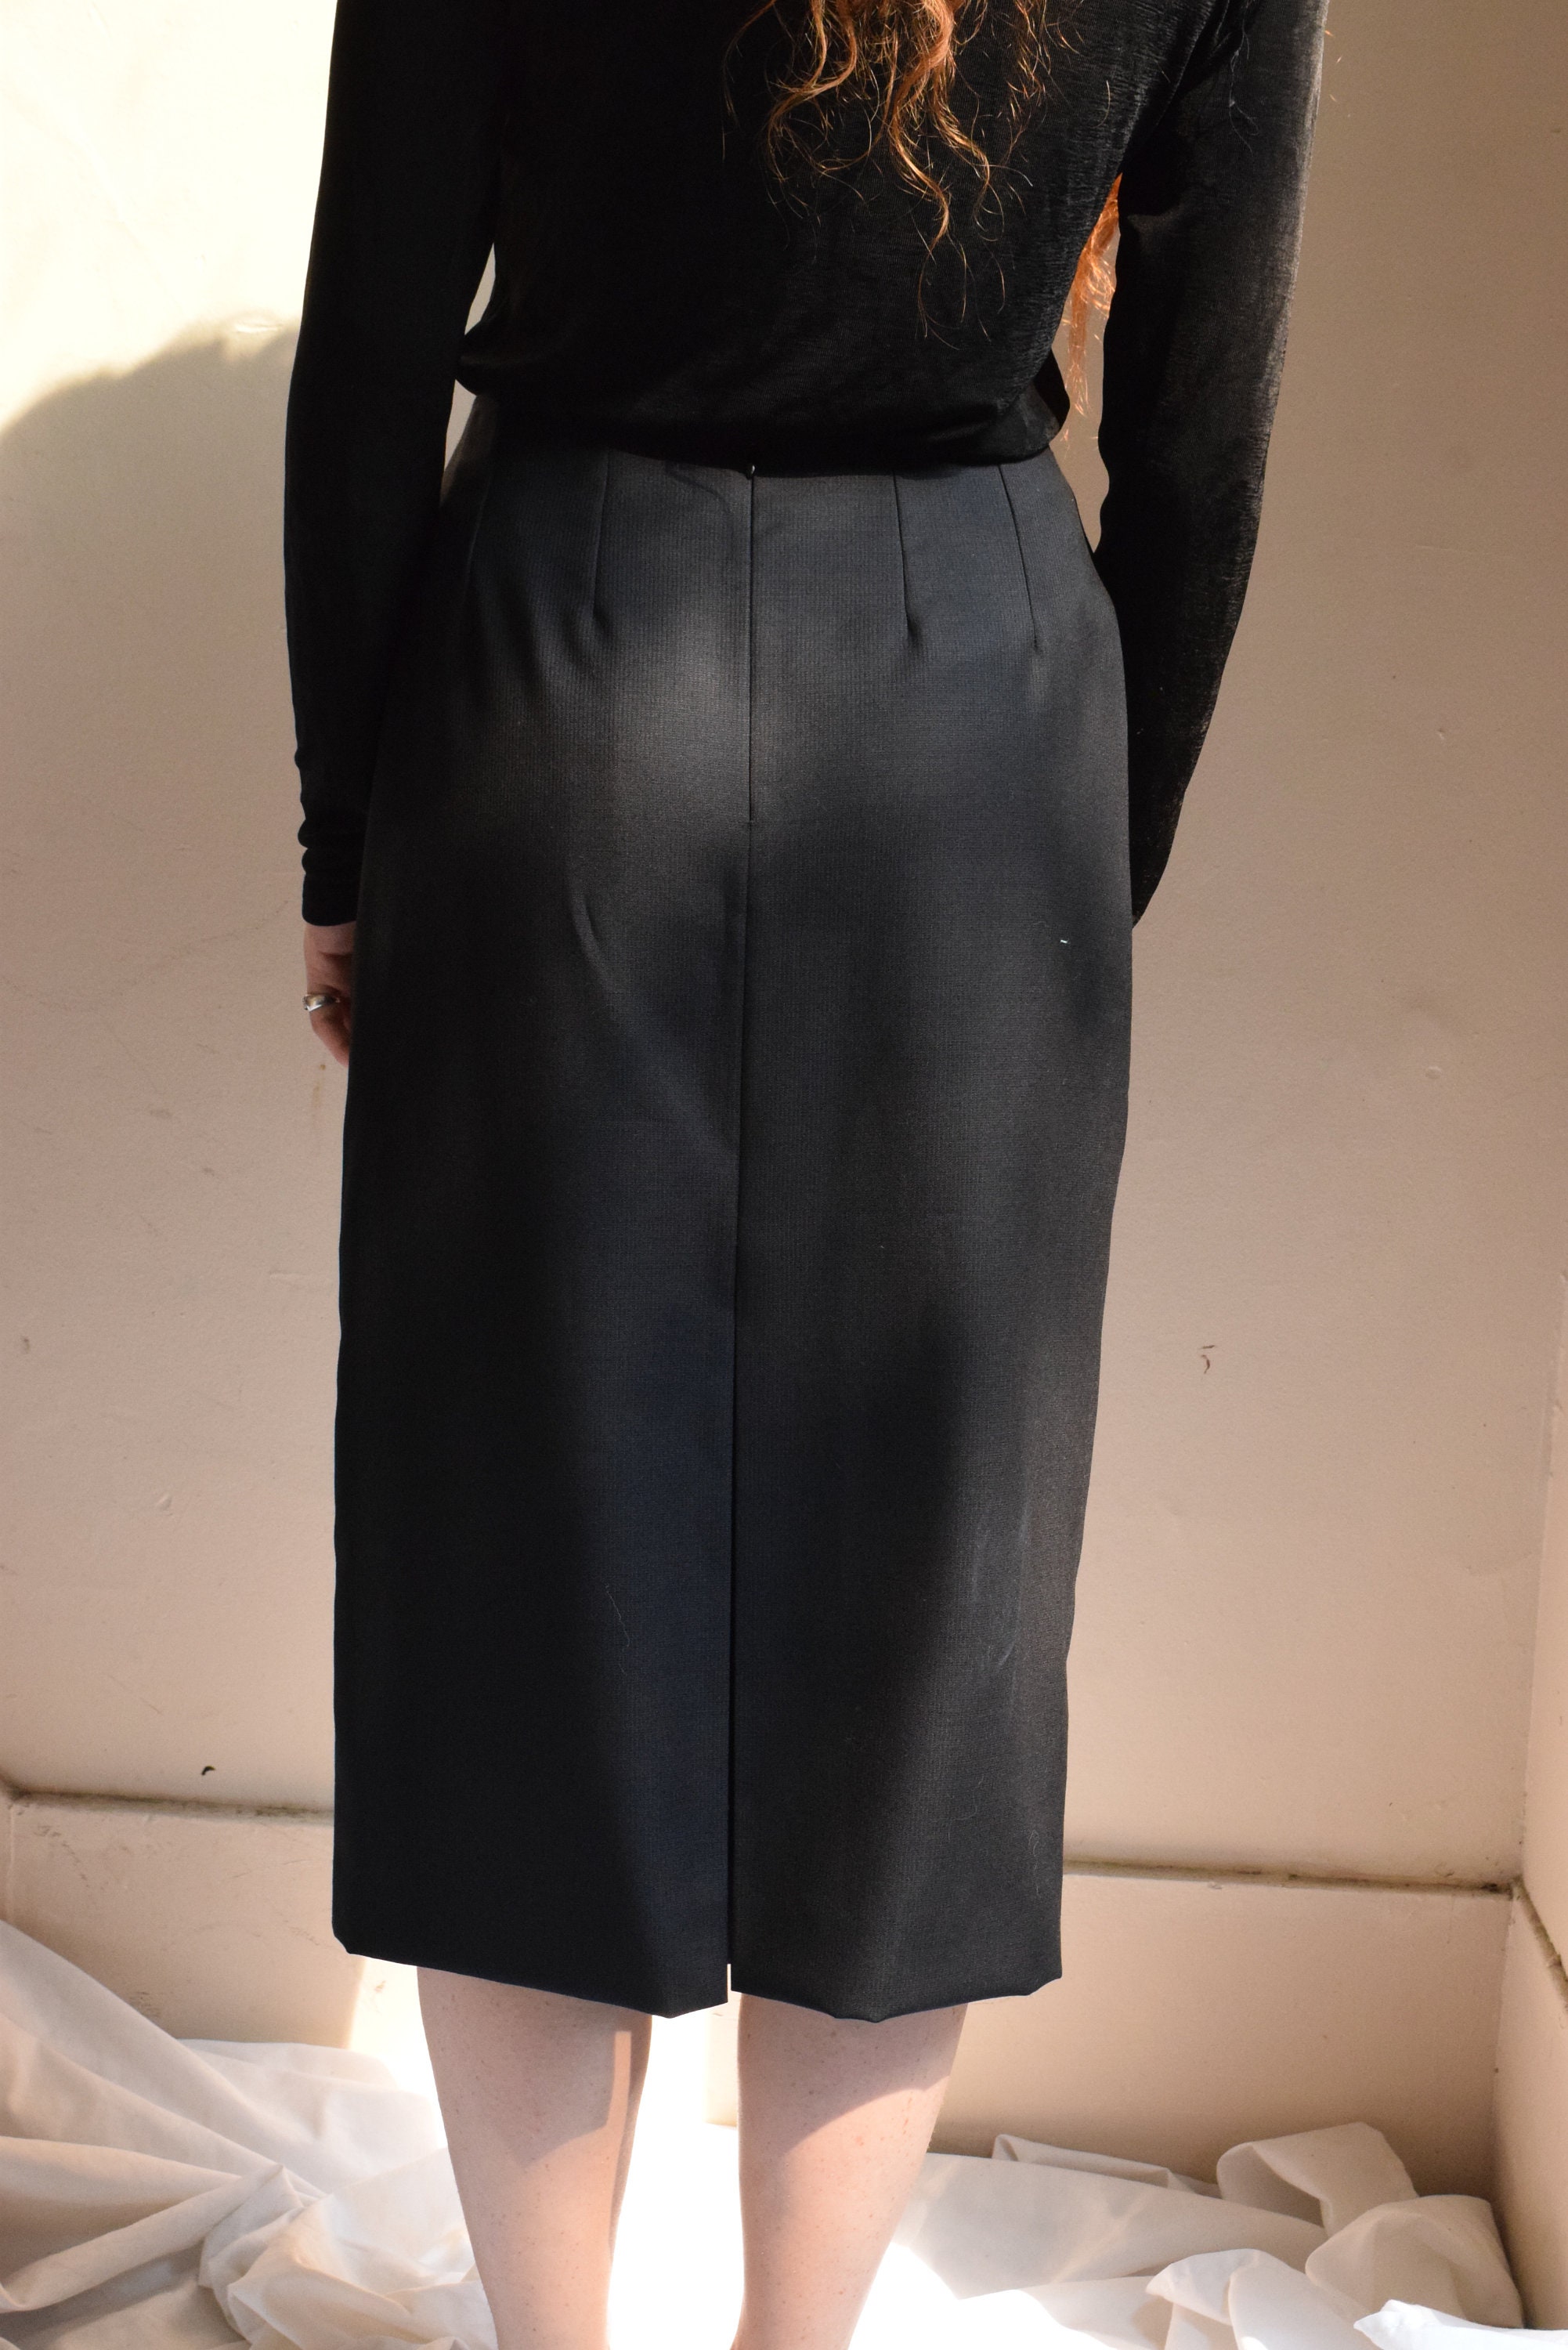 Black Christian Dior Wool Skirt